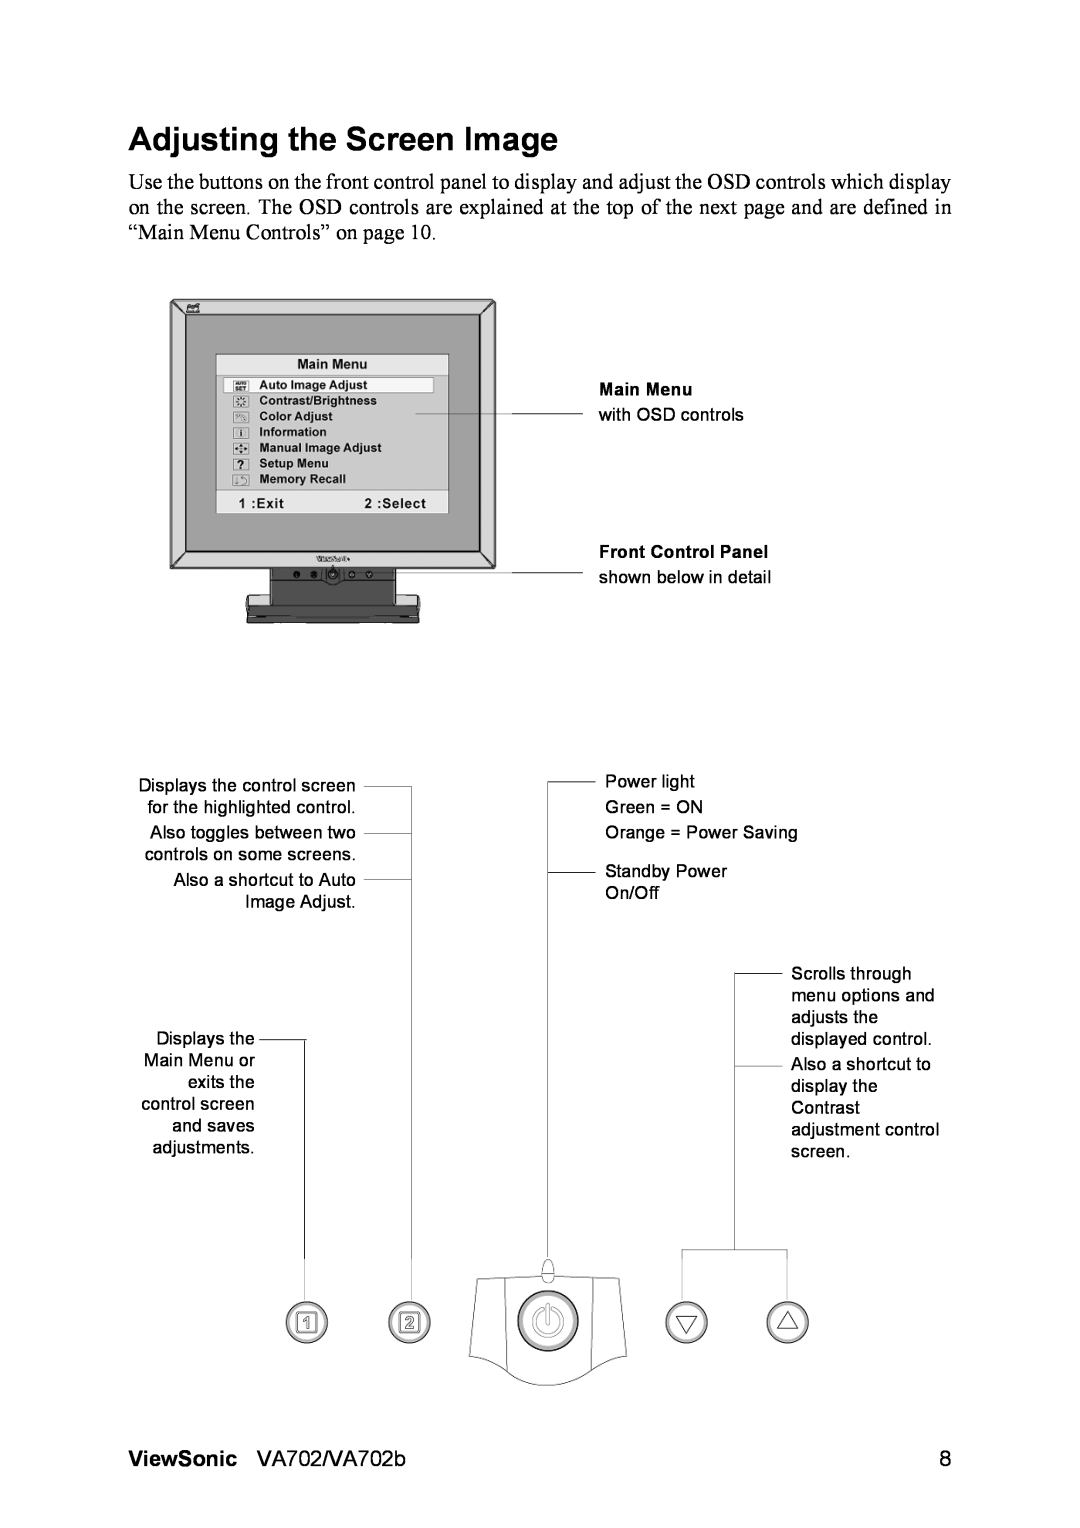 ViewSonic VA702 manual Adjusting the Screen Image, Main Menu, Front Control Panel 